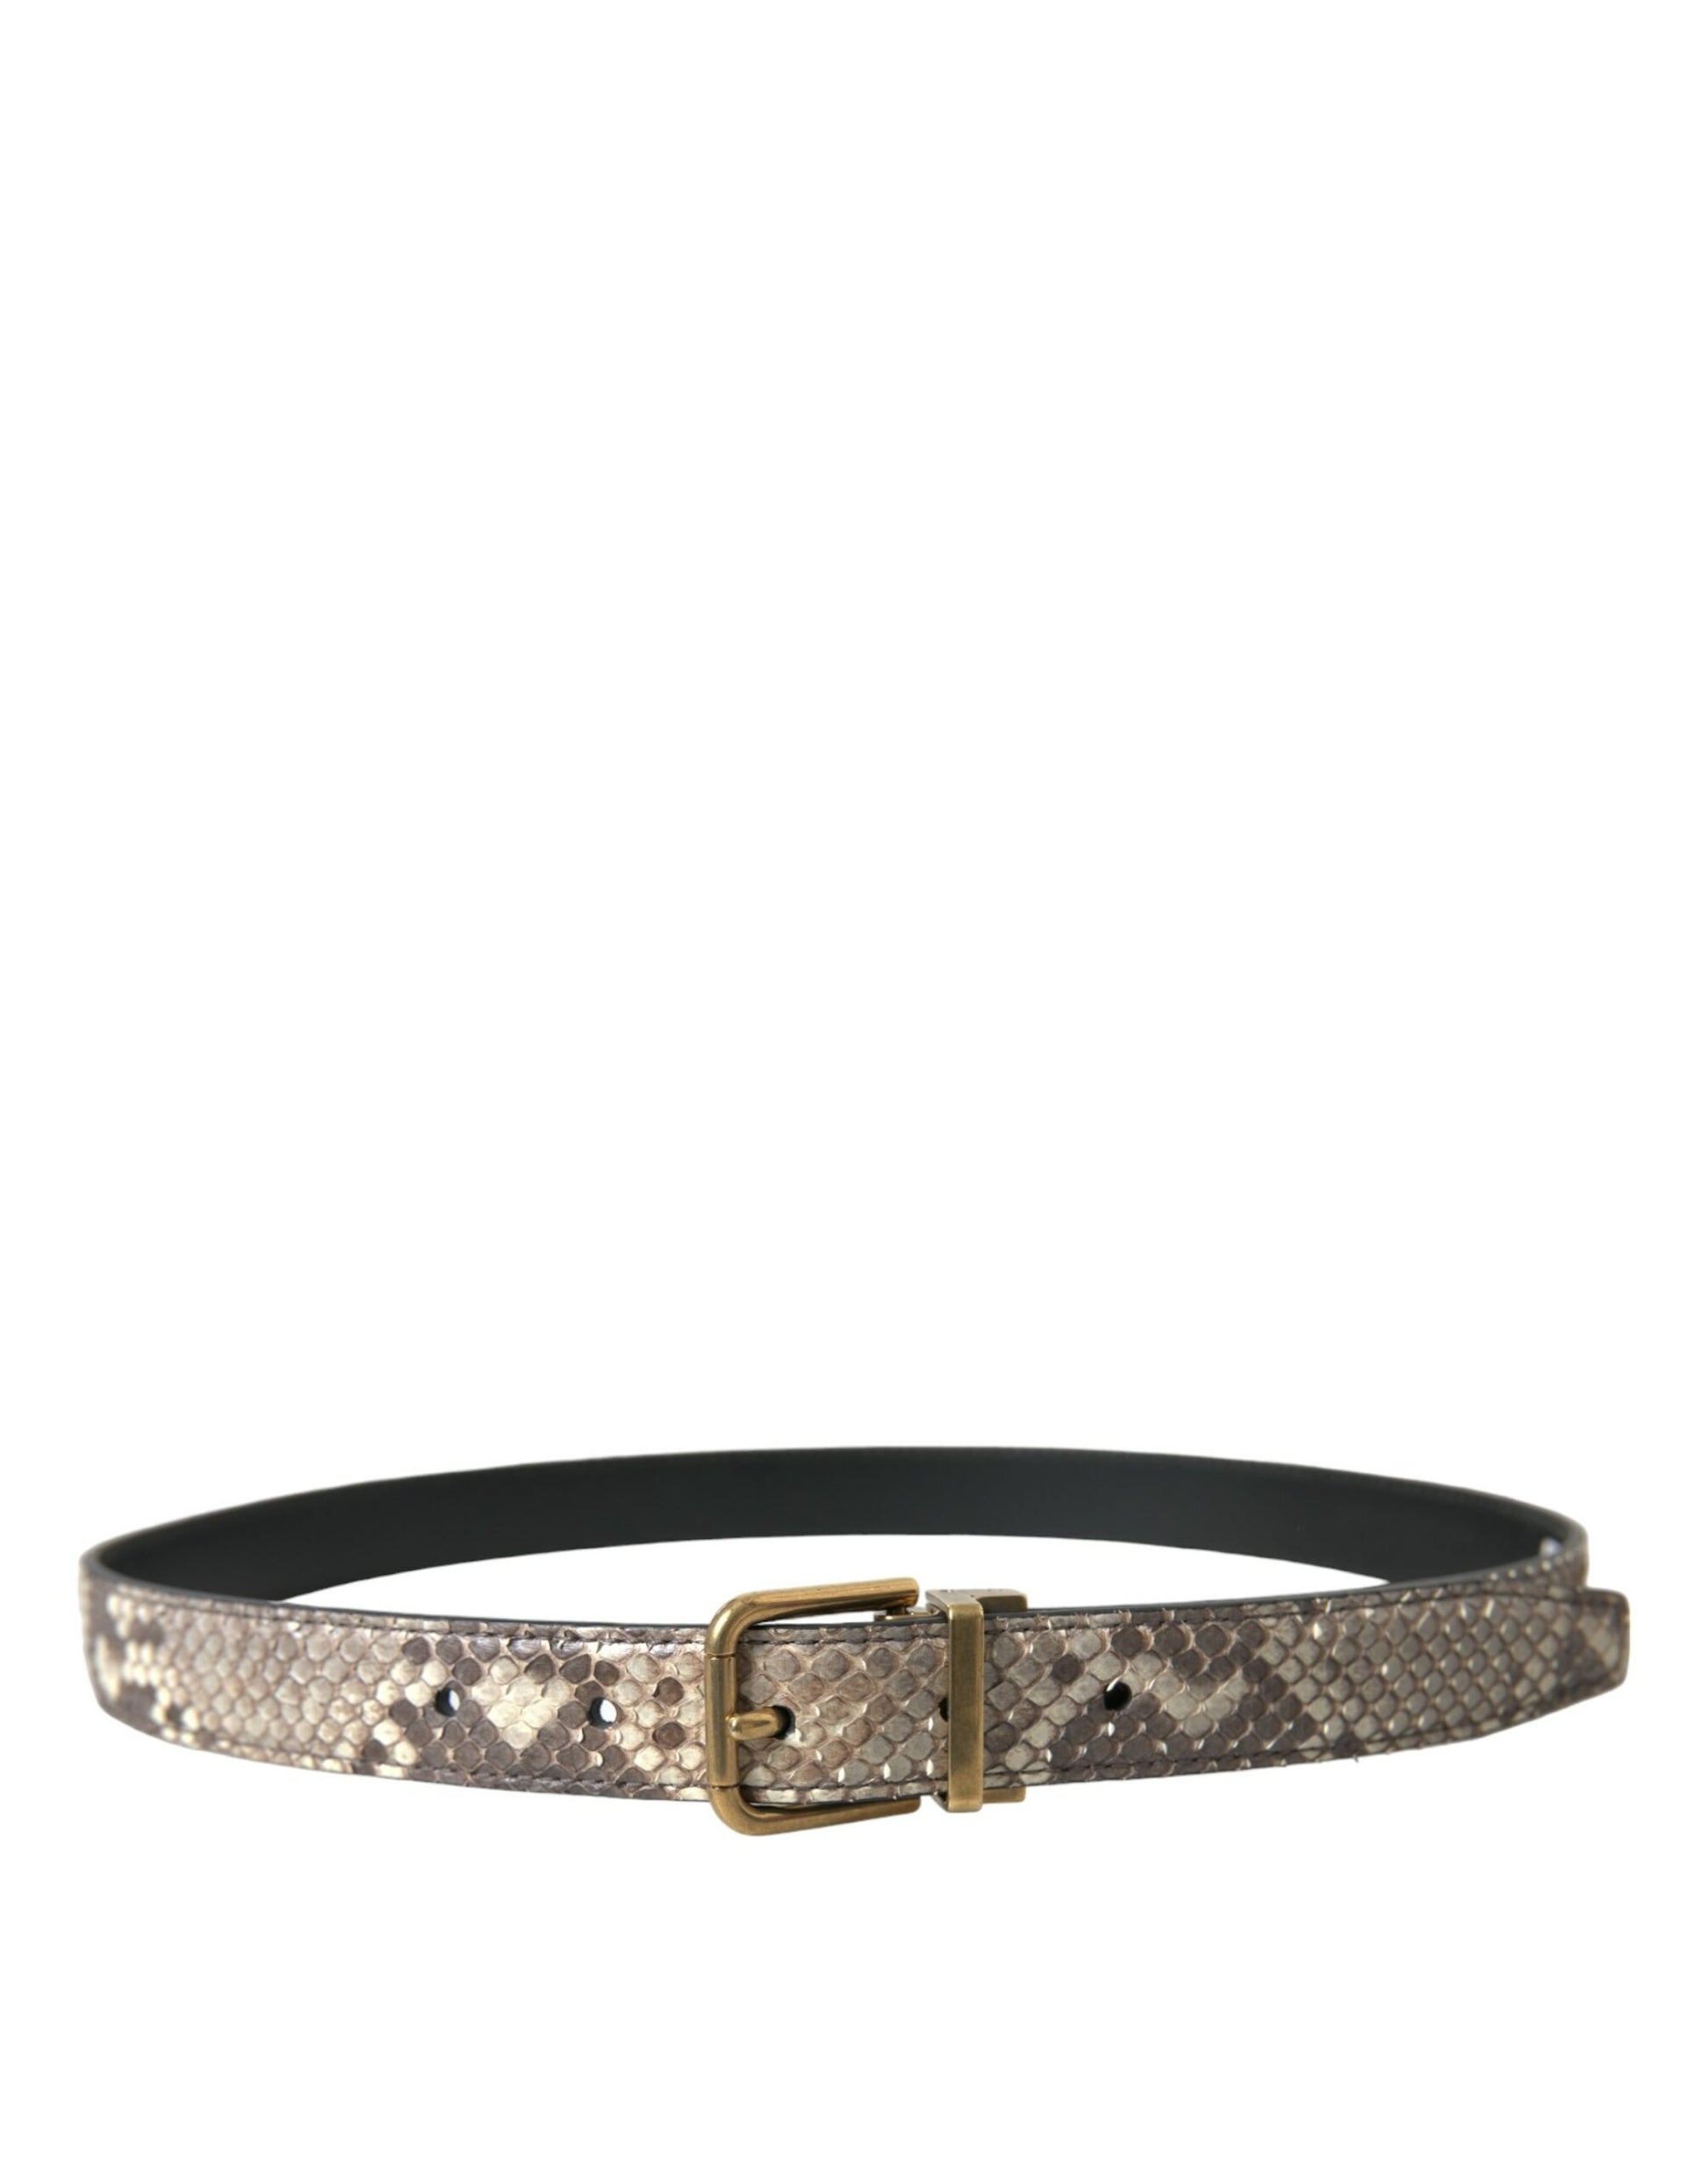 Dolce & Gabbana Elegant Italian Leather Belt | Fashionsarah.com